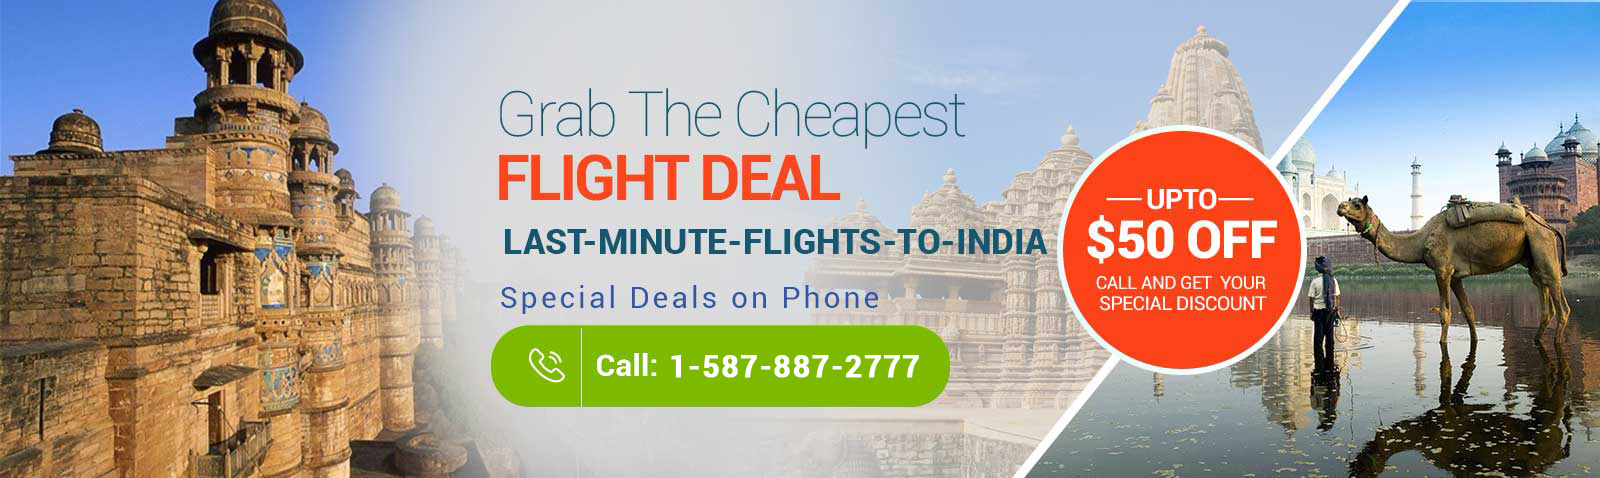 Cheap flights to Mumbai Delhi - ItsBharat.com - Free